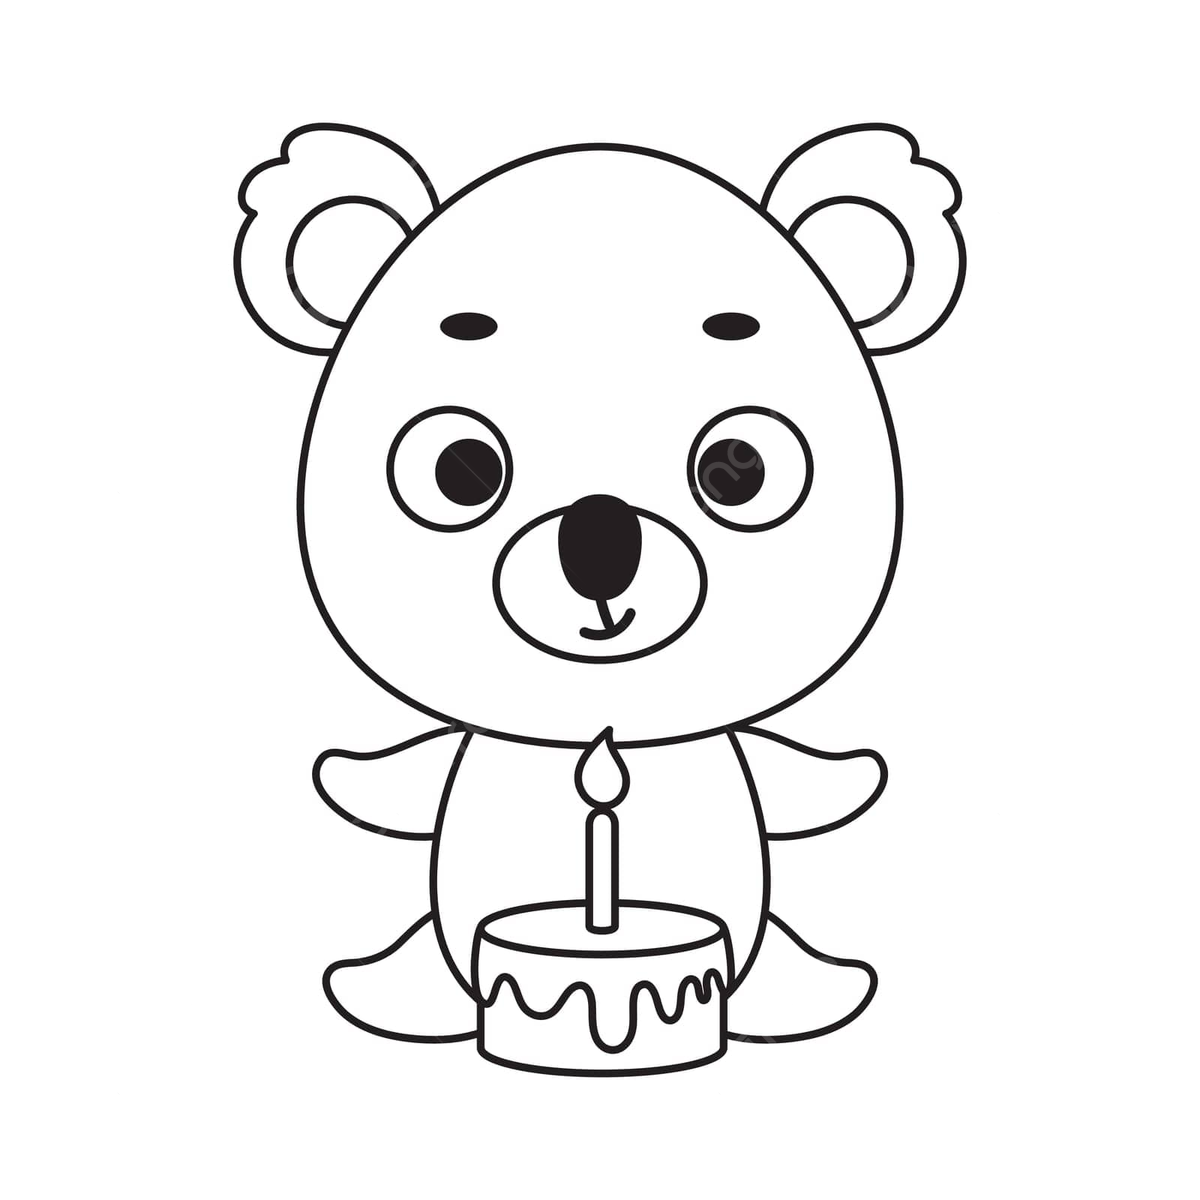 Cute koala birthday coloring page for preschoolers school drawing worksheet vector school drawing worksheet png and vector with transparent background for free download